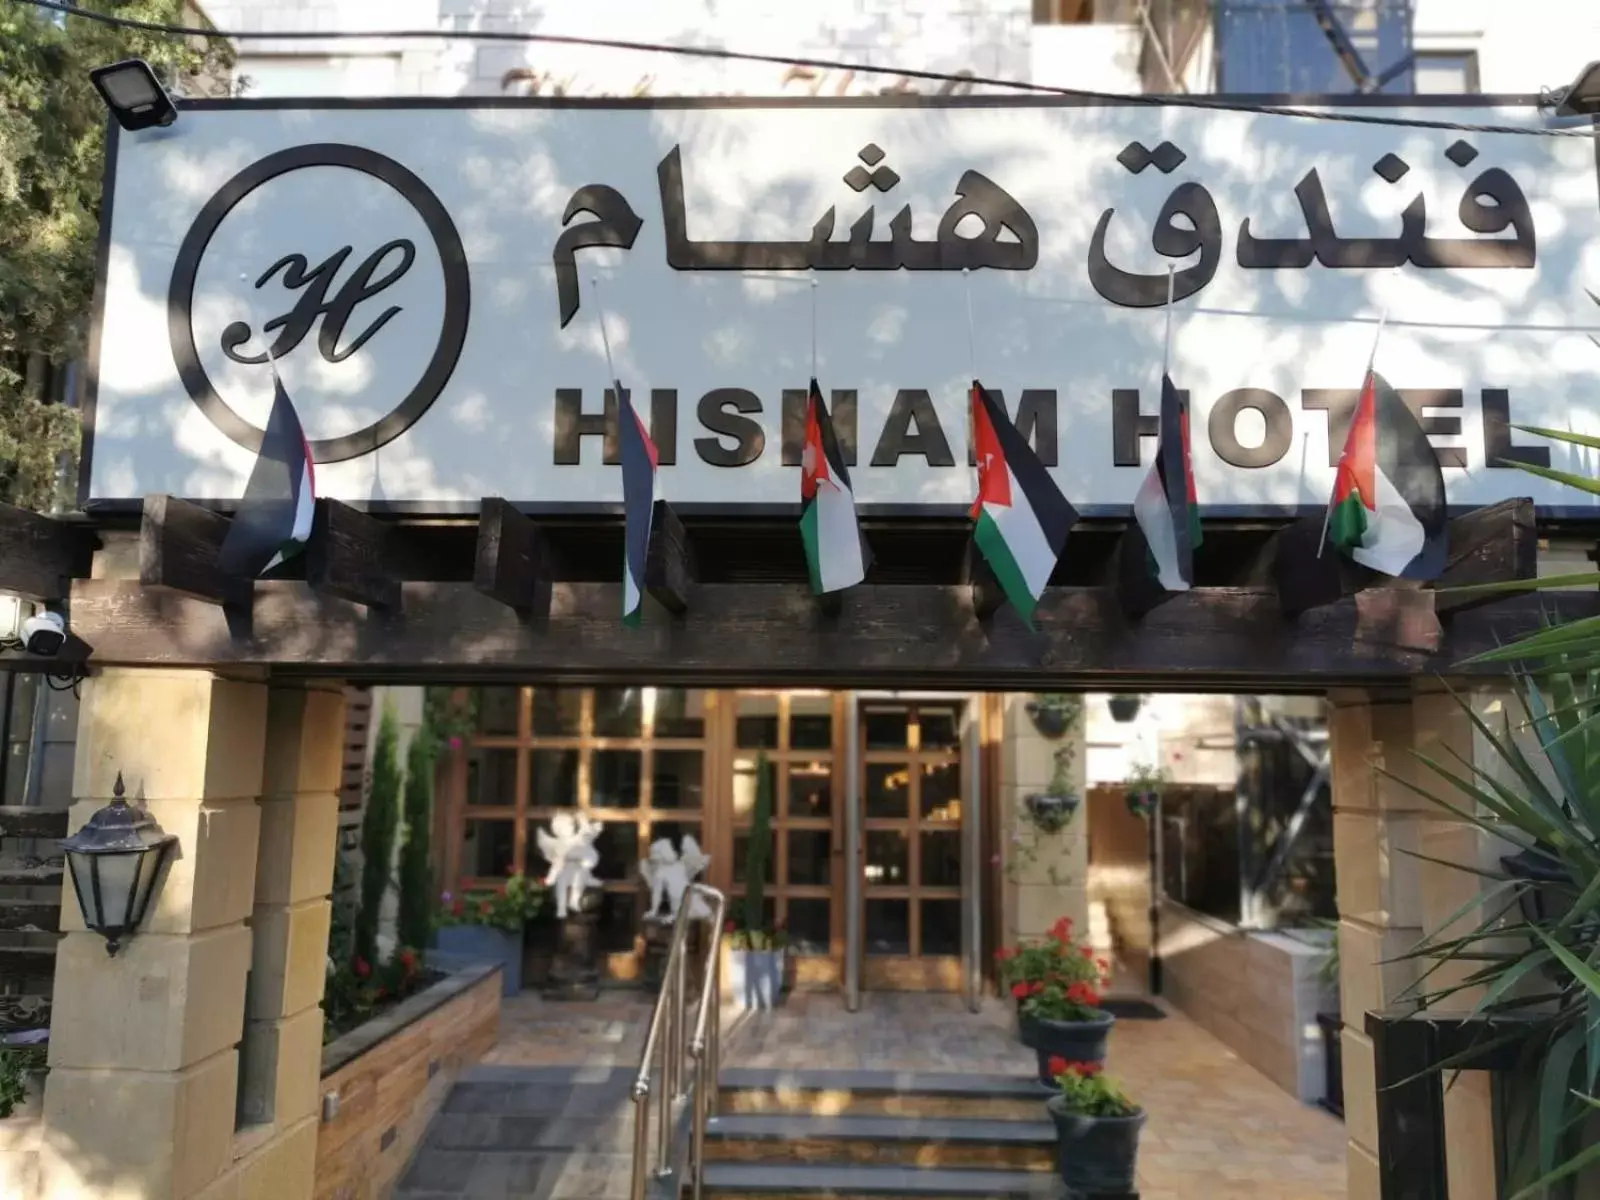 Day in Hisham Hotel